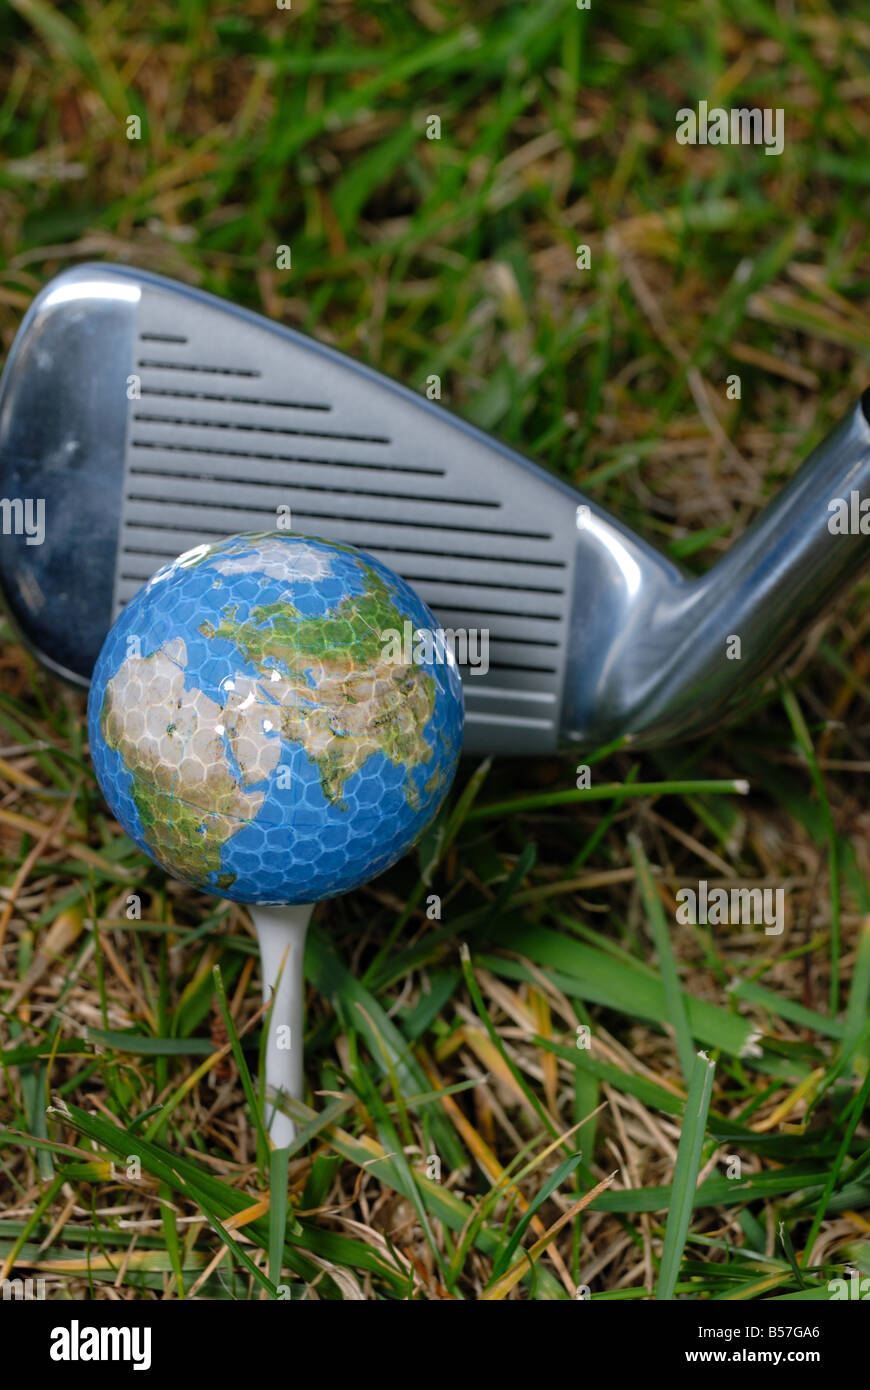 http://c8.alamy.com/comp/B57GA6/a-golf-ball-depicting-the-earth-sits-on-a-golf-tee-B57GA6.jpg